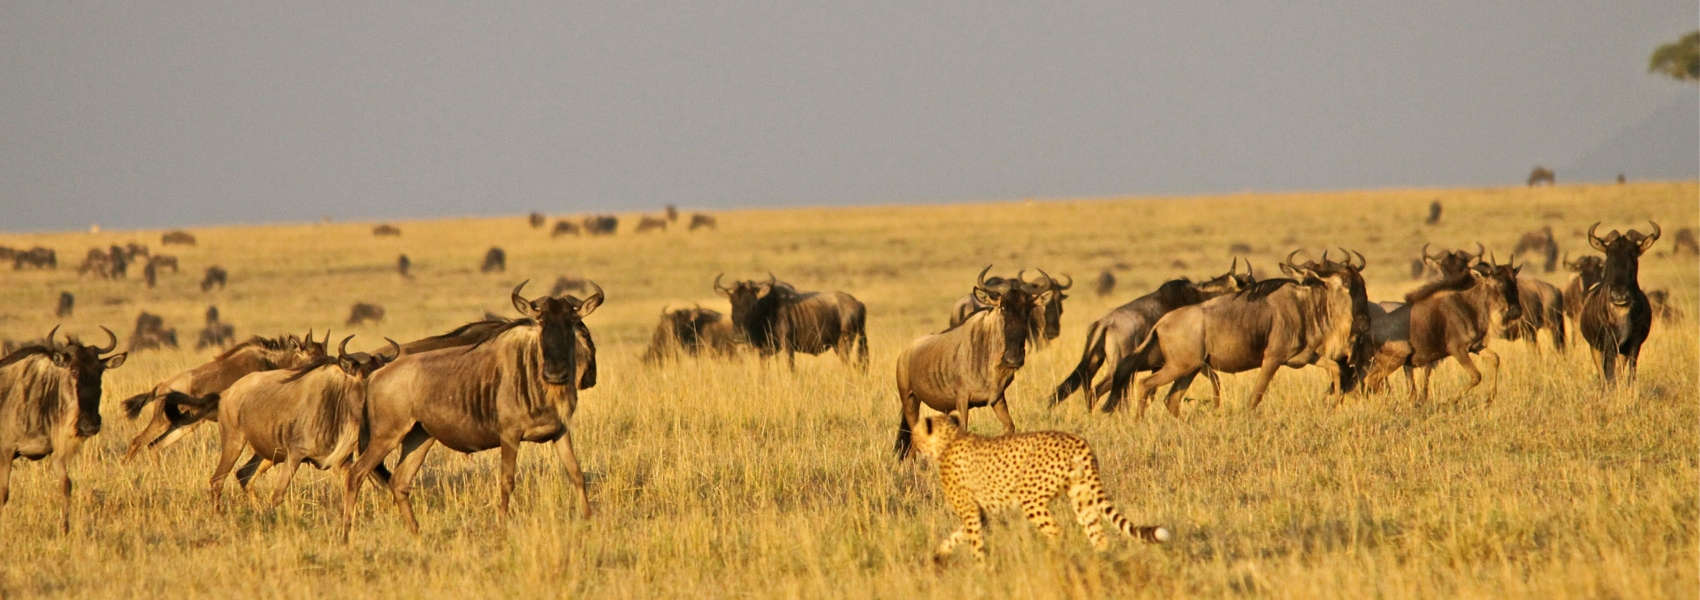 African Serengeti National Park Safari cheetah